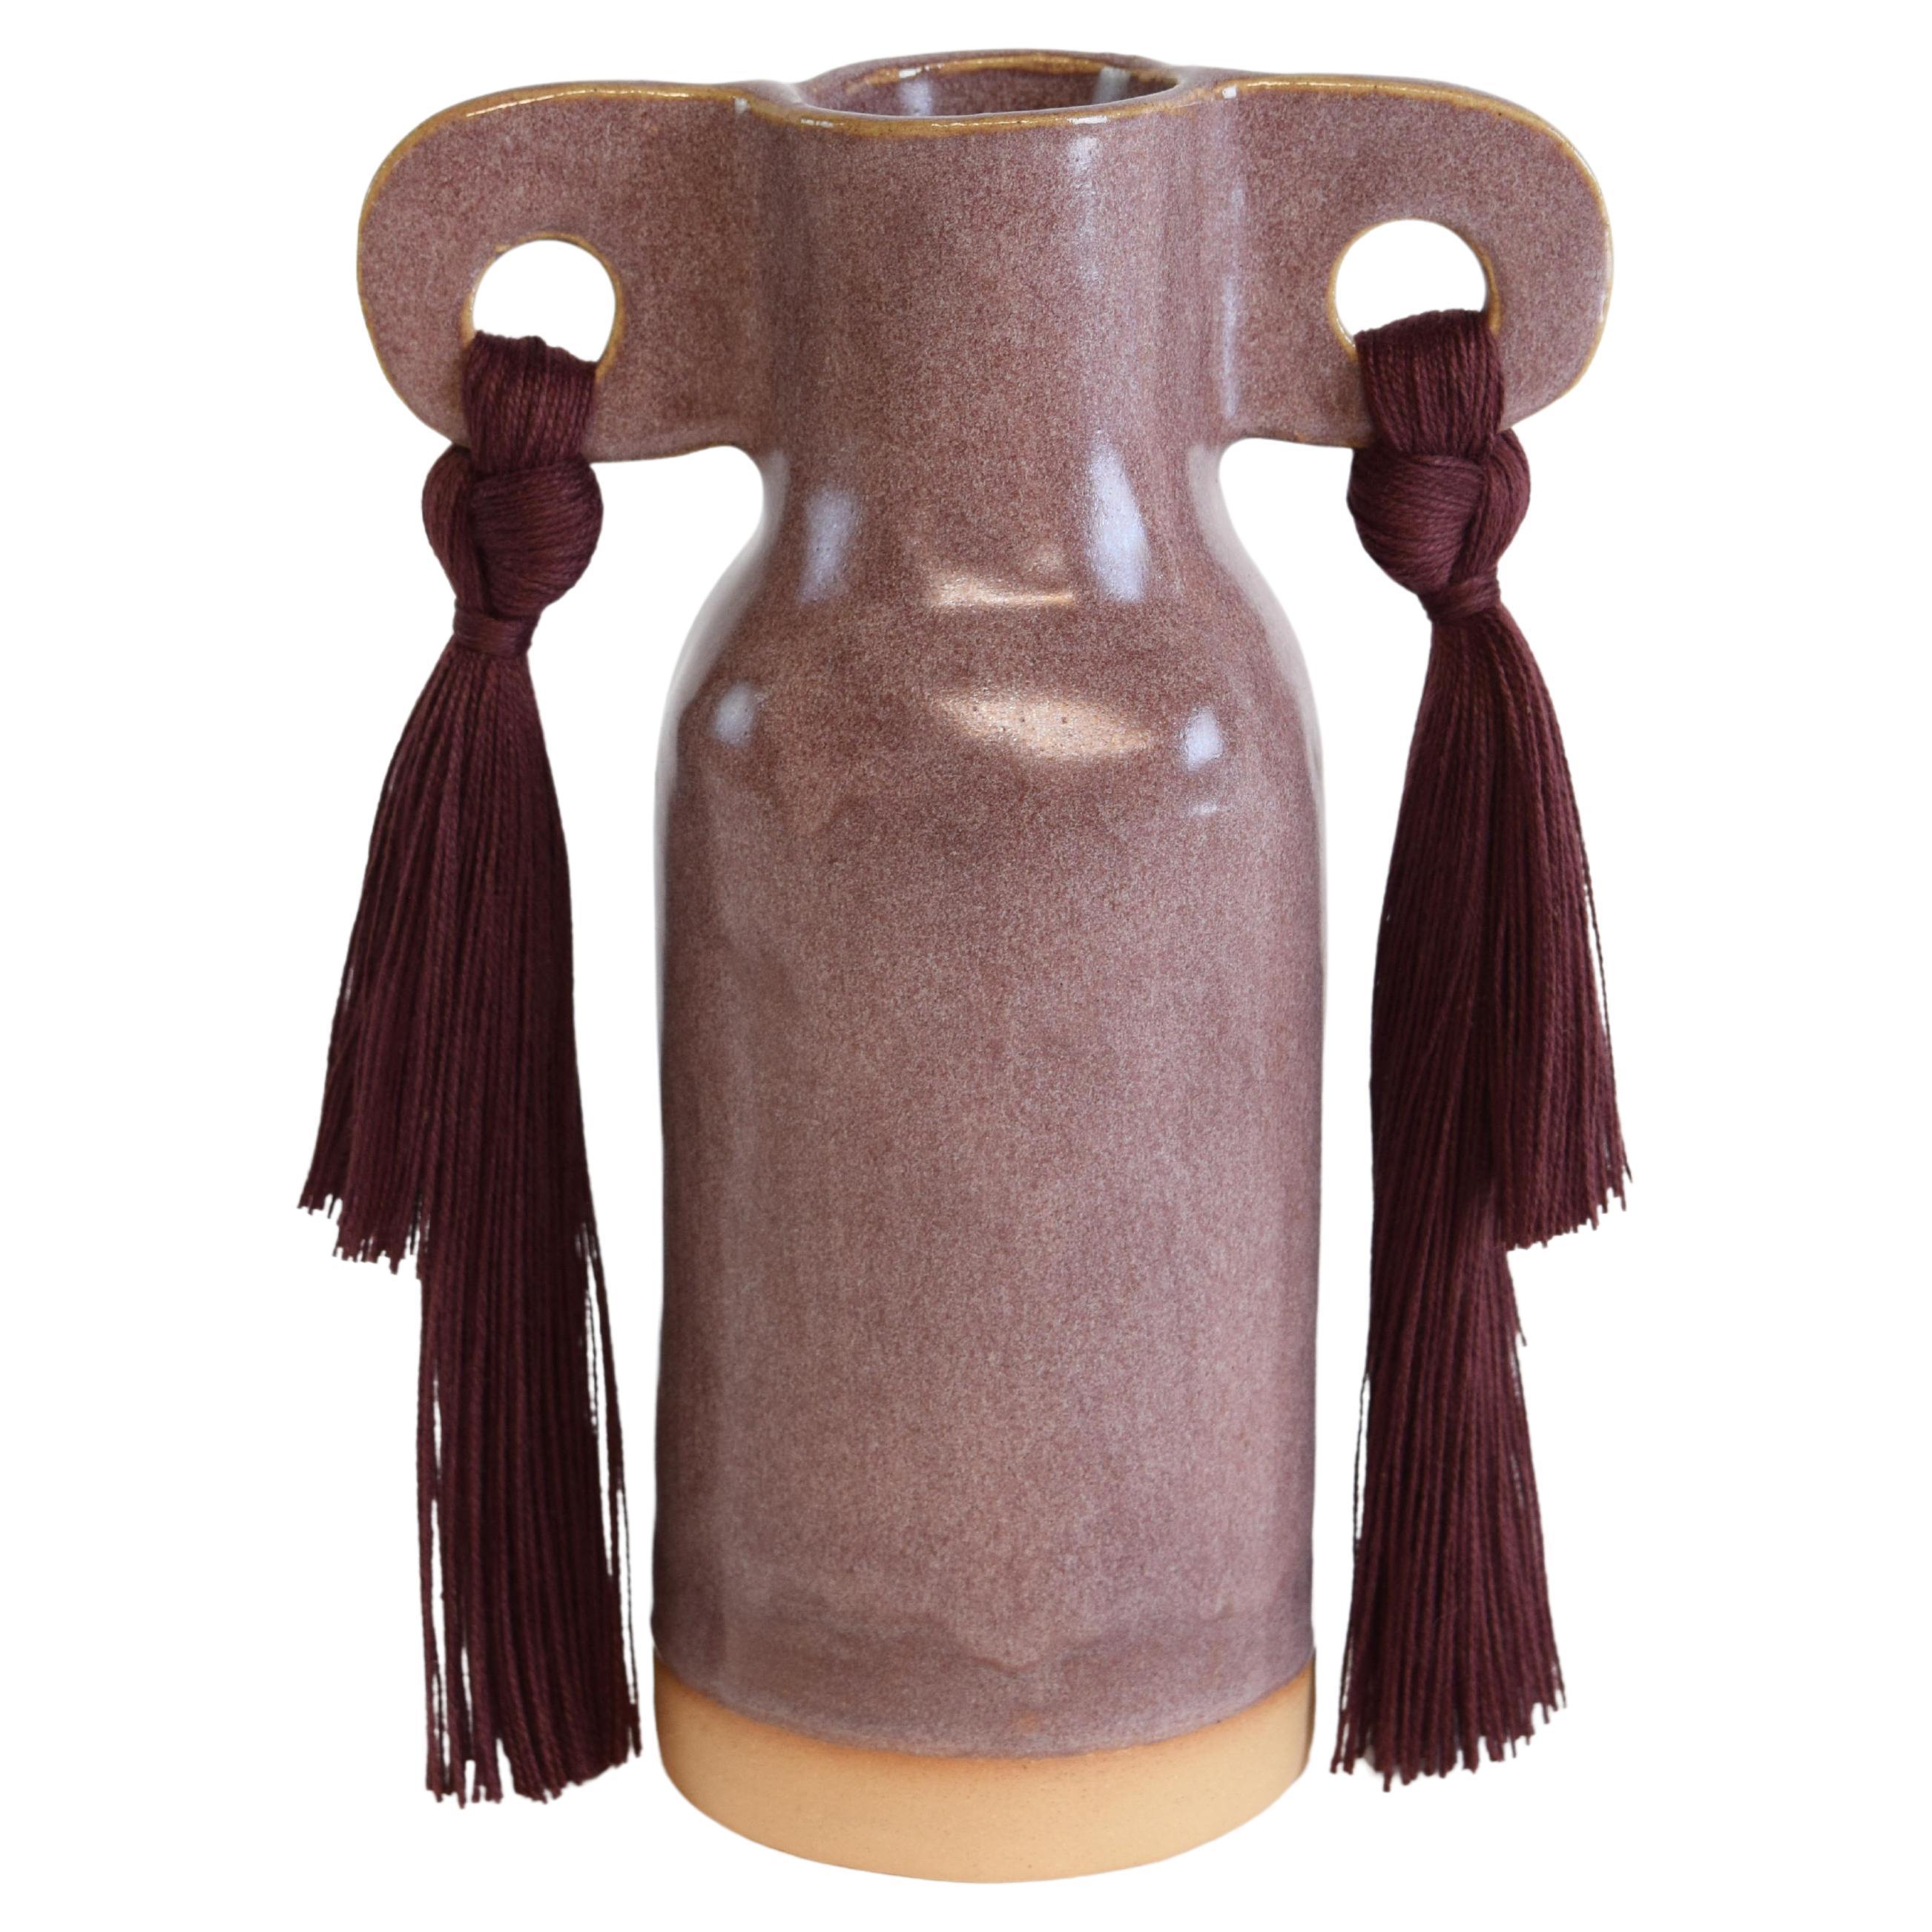 Handmade Ceramic Vase #606 in Light Burgundy Glaze with Tencel Fringe Details